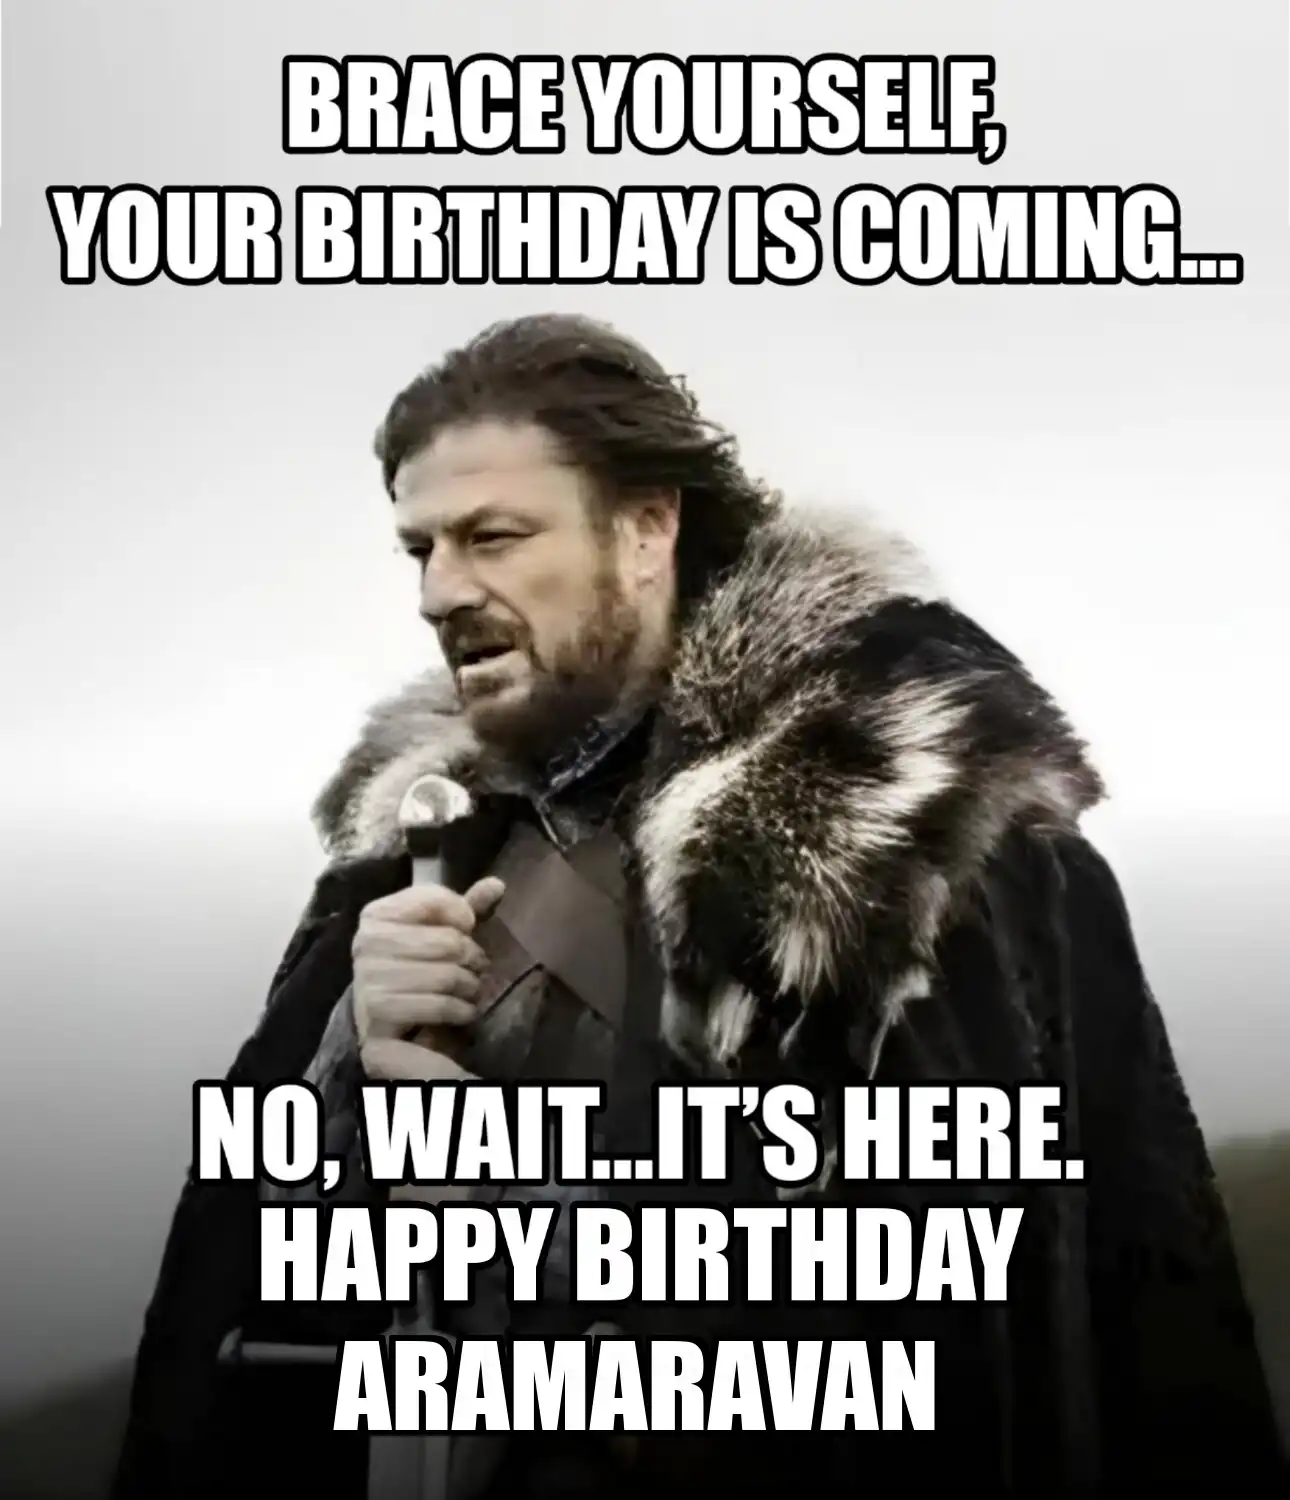 Happy Birthday Aramaravan Brace Yourself Your Birthday Is Coming Meme